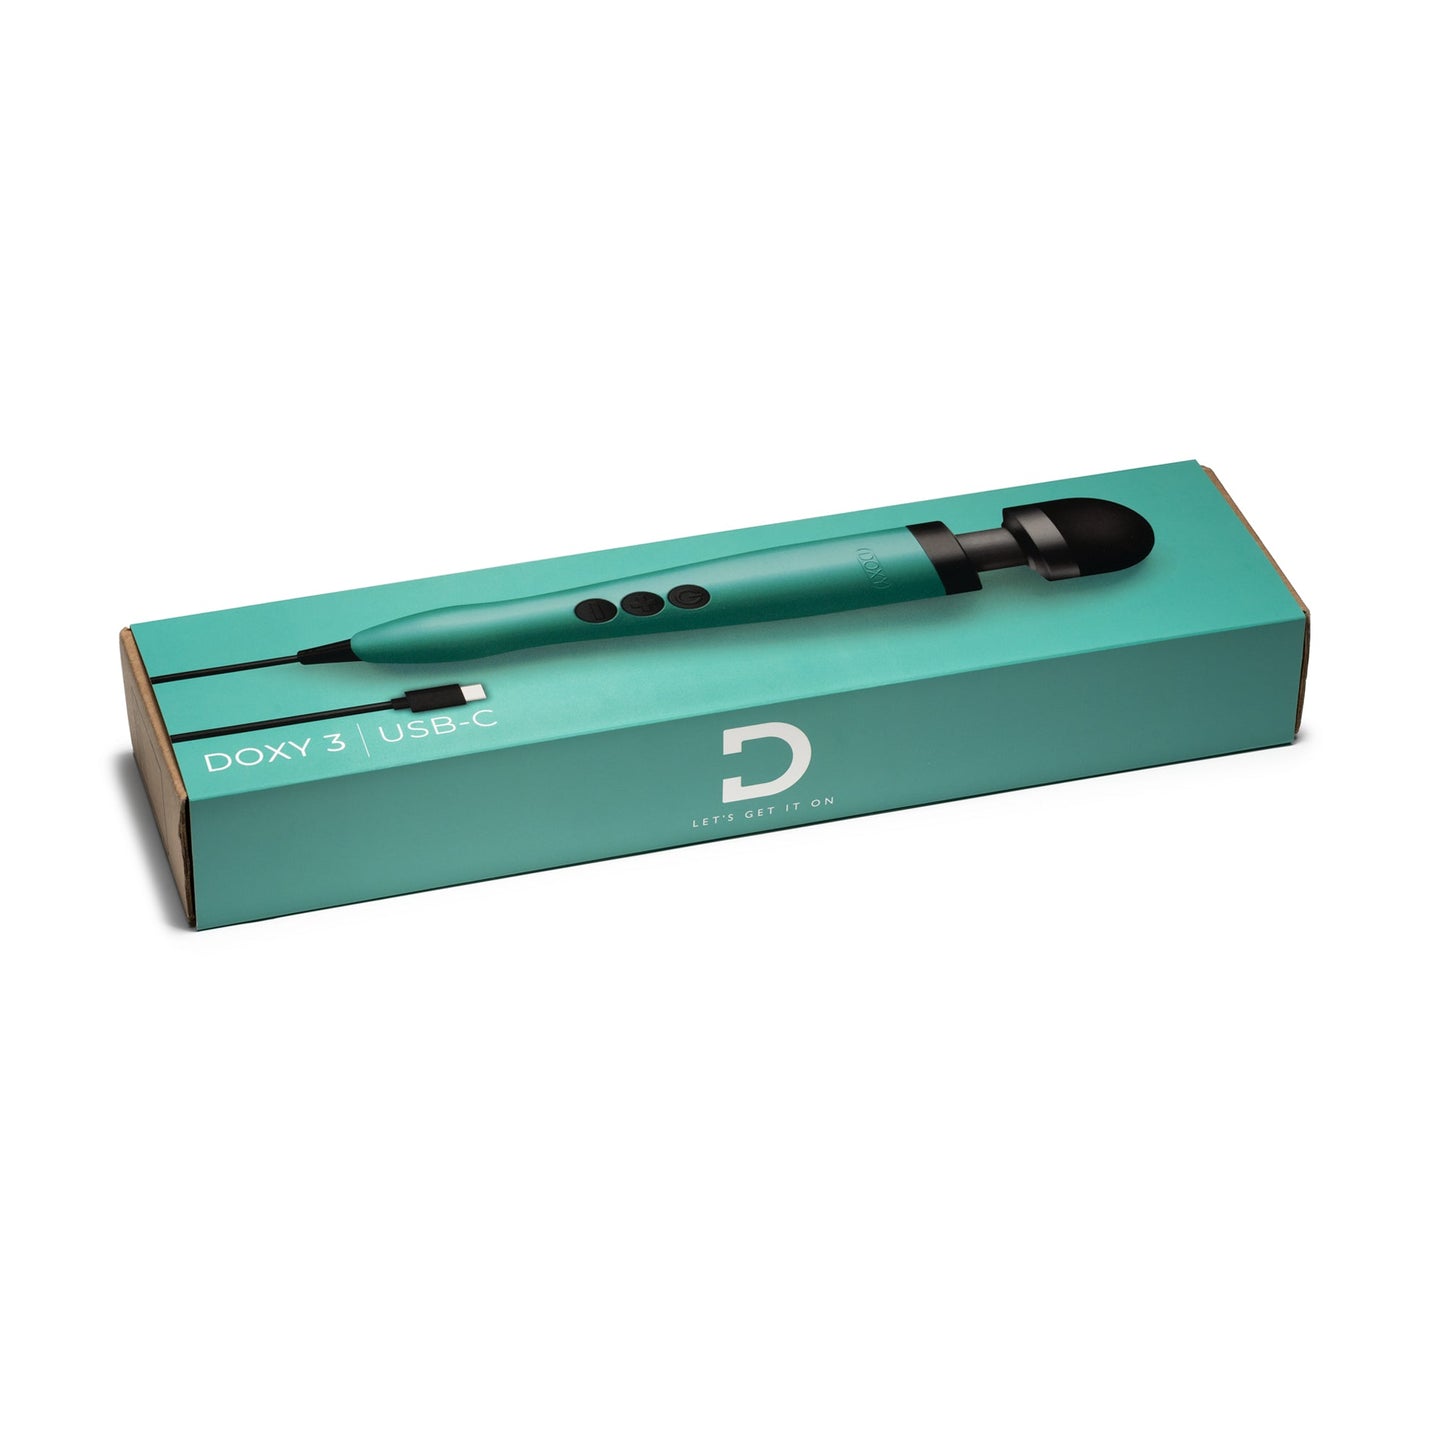 3 USB-C - Turquoise